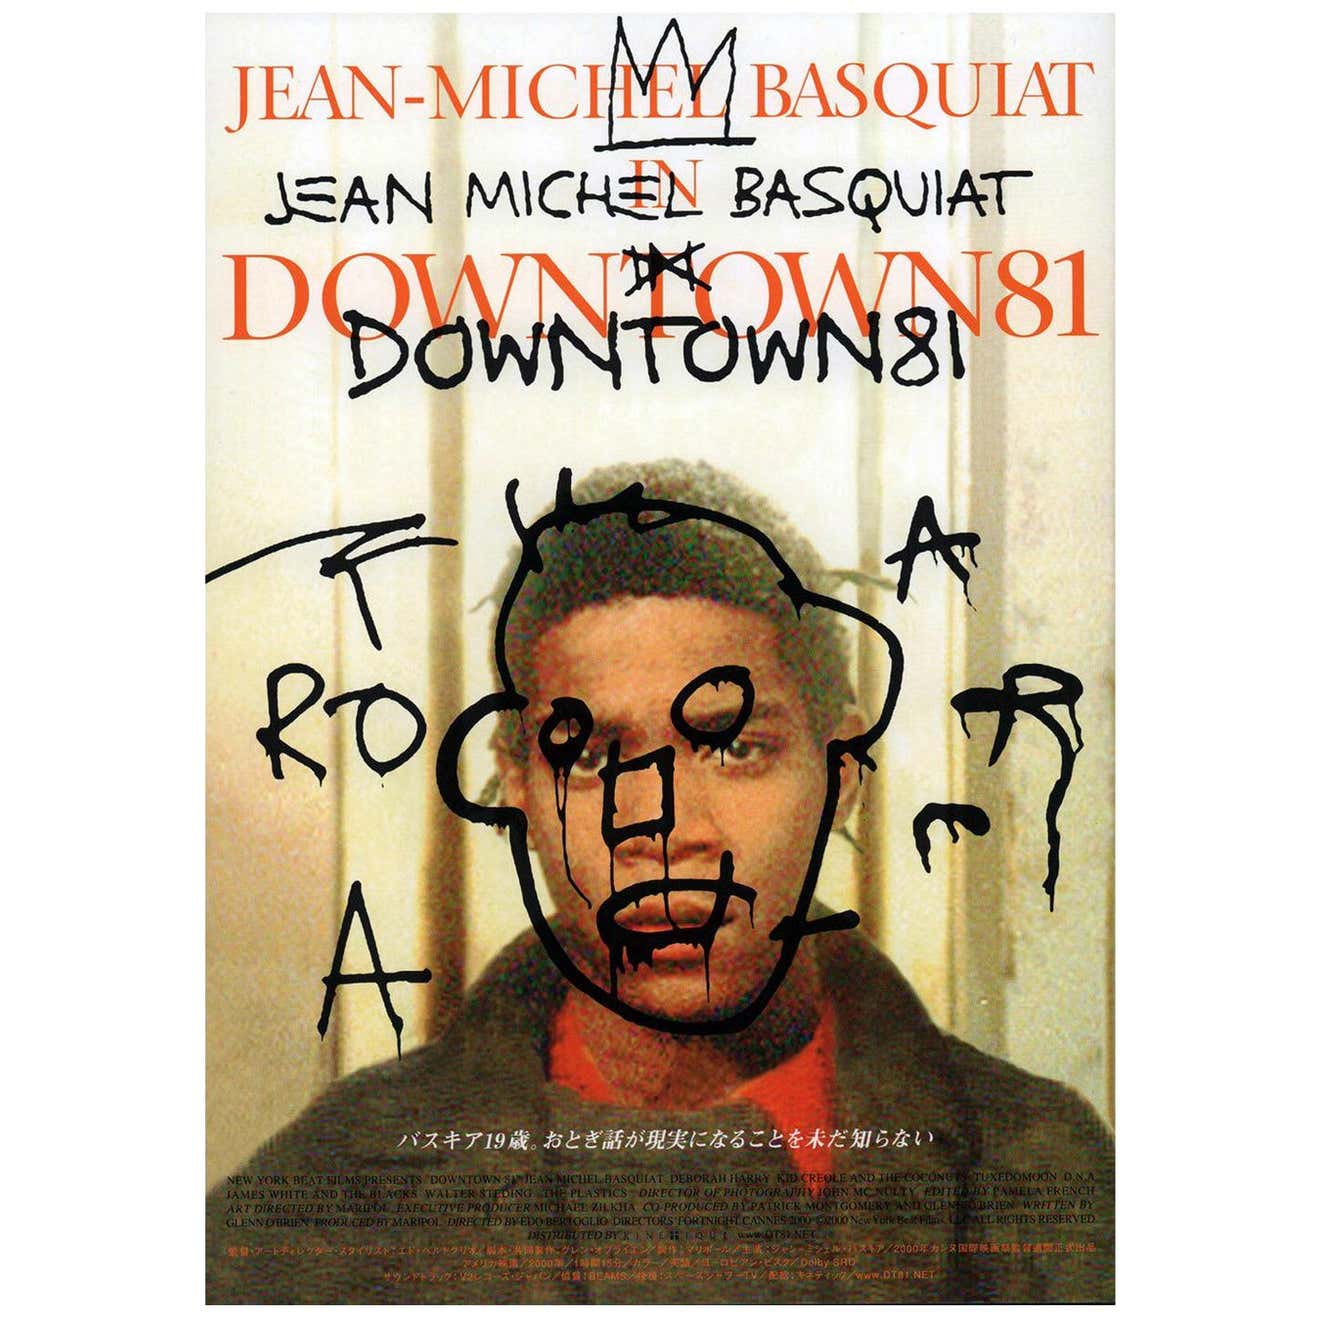 Basquiat Downtown 81 Film Poster